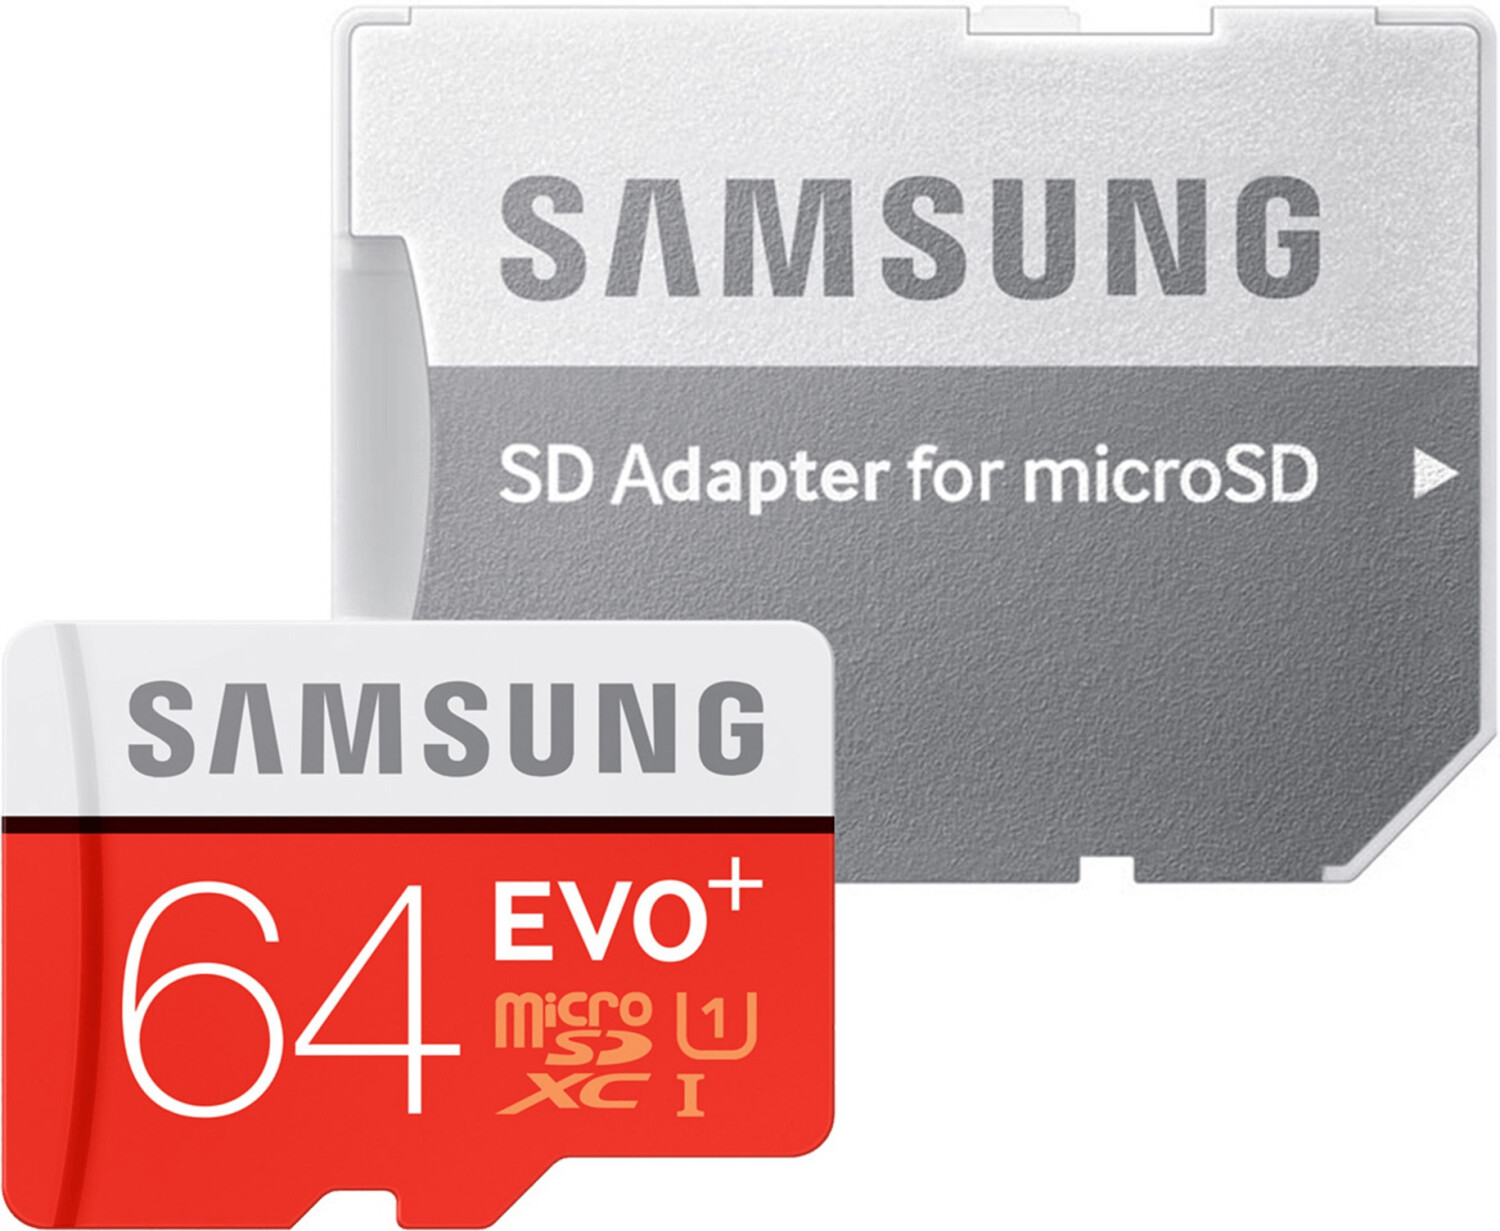 Carte microSD Evo 64Go + adapt. SD SAMSUNG : la carte microSD à